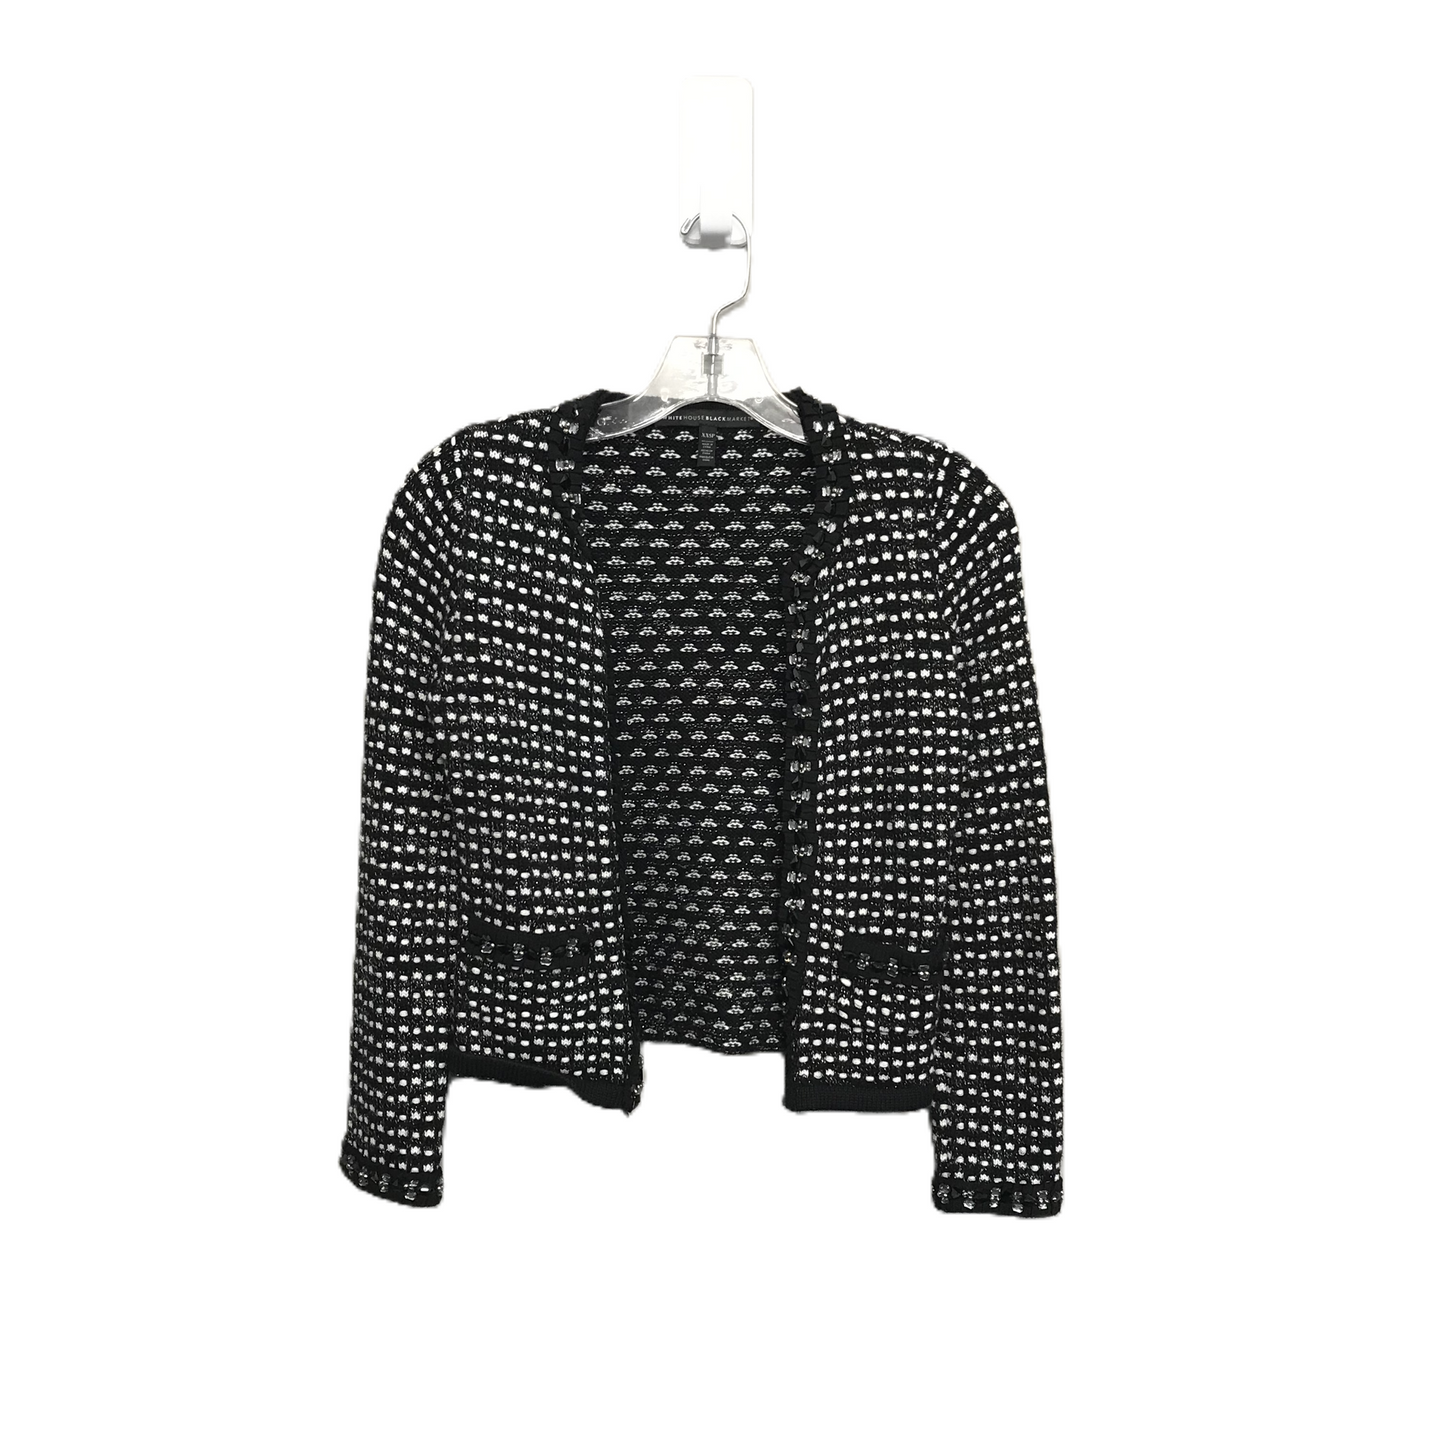 Sweater Cardigan By White House Black Market  Size: Xxs